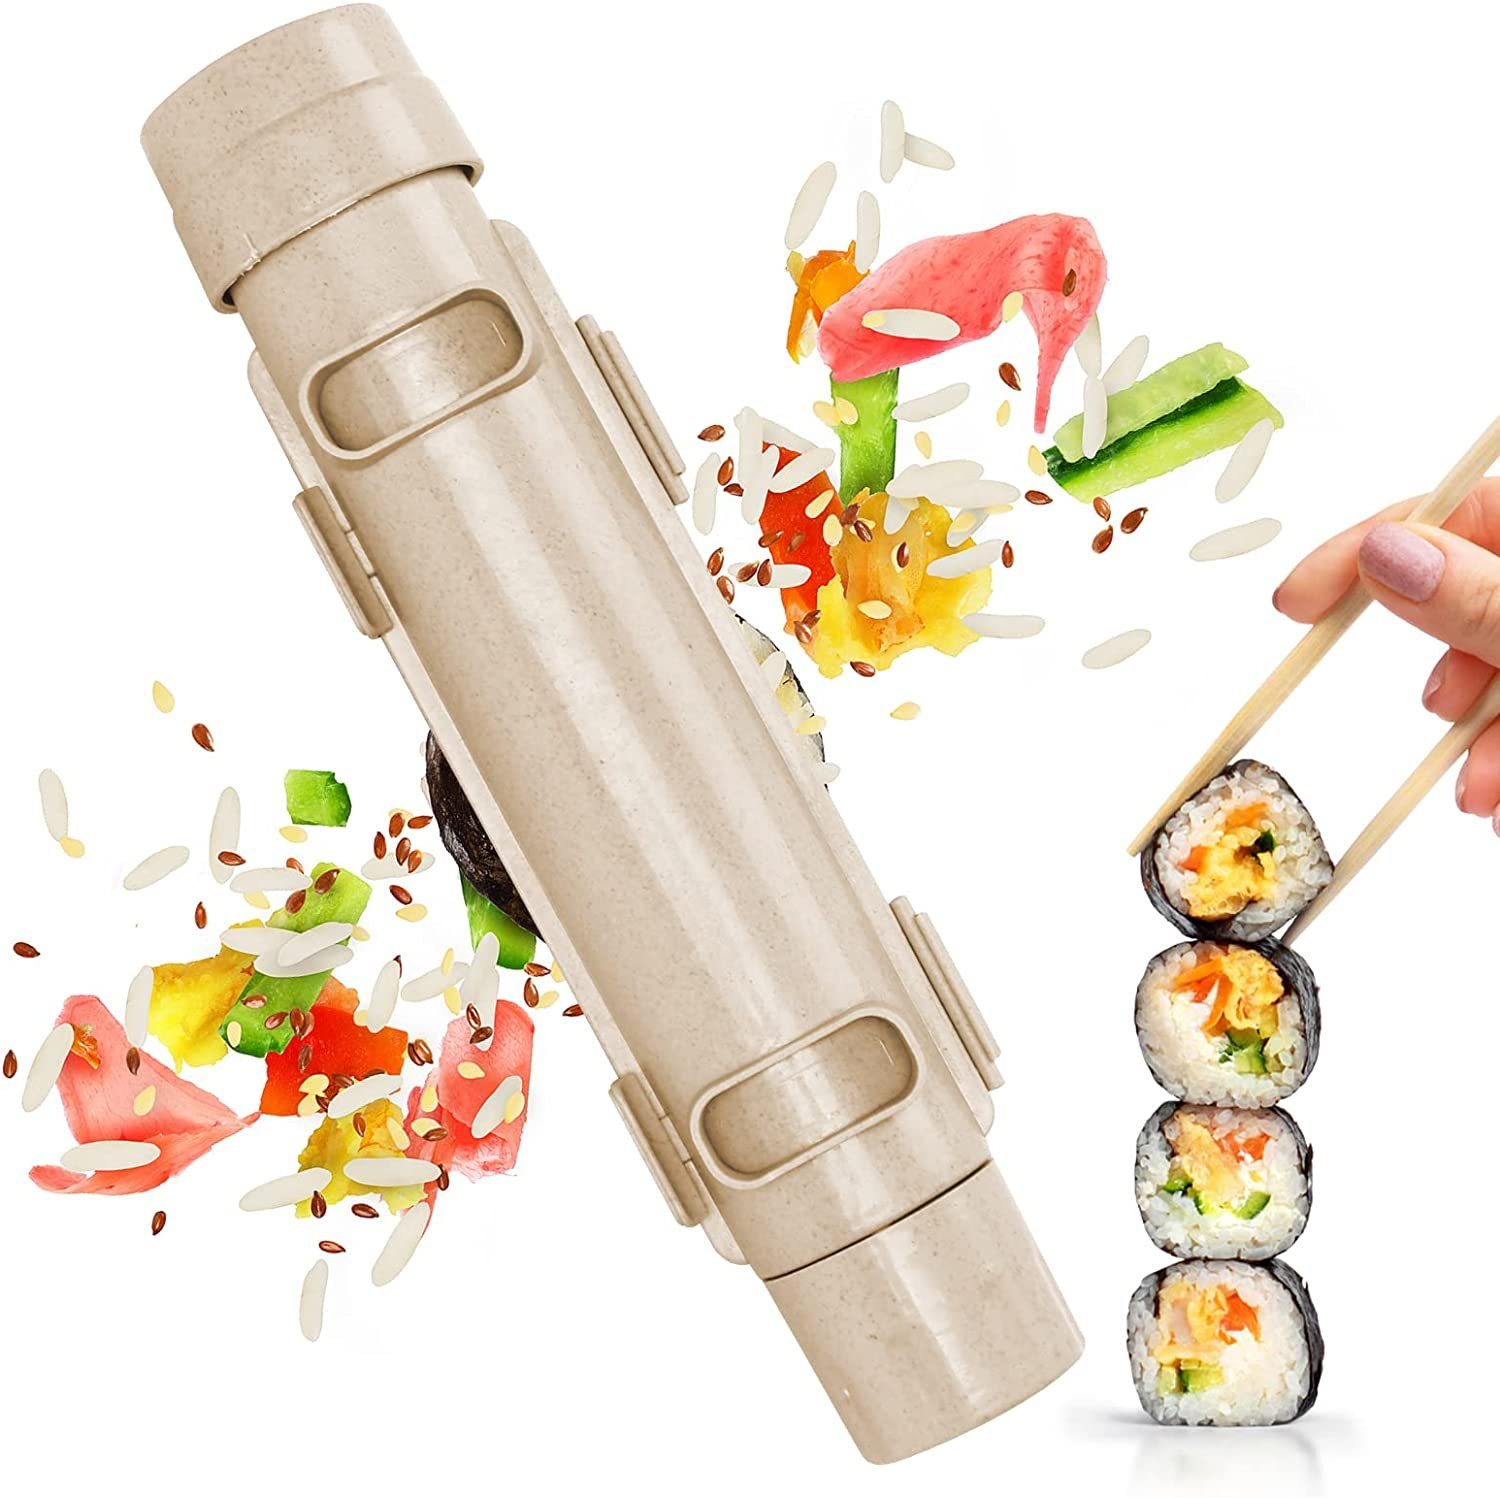 NUODWELL Sushiteller Sushi-DIY-Maschine, Sushi-Bazooka, gemeinsame Zubereitungswerkzeuge Beige